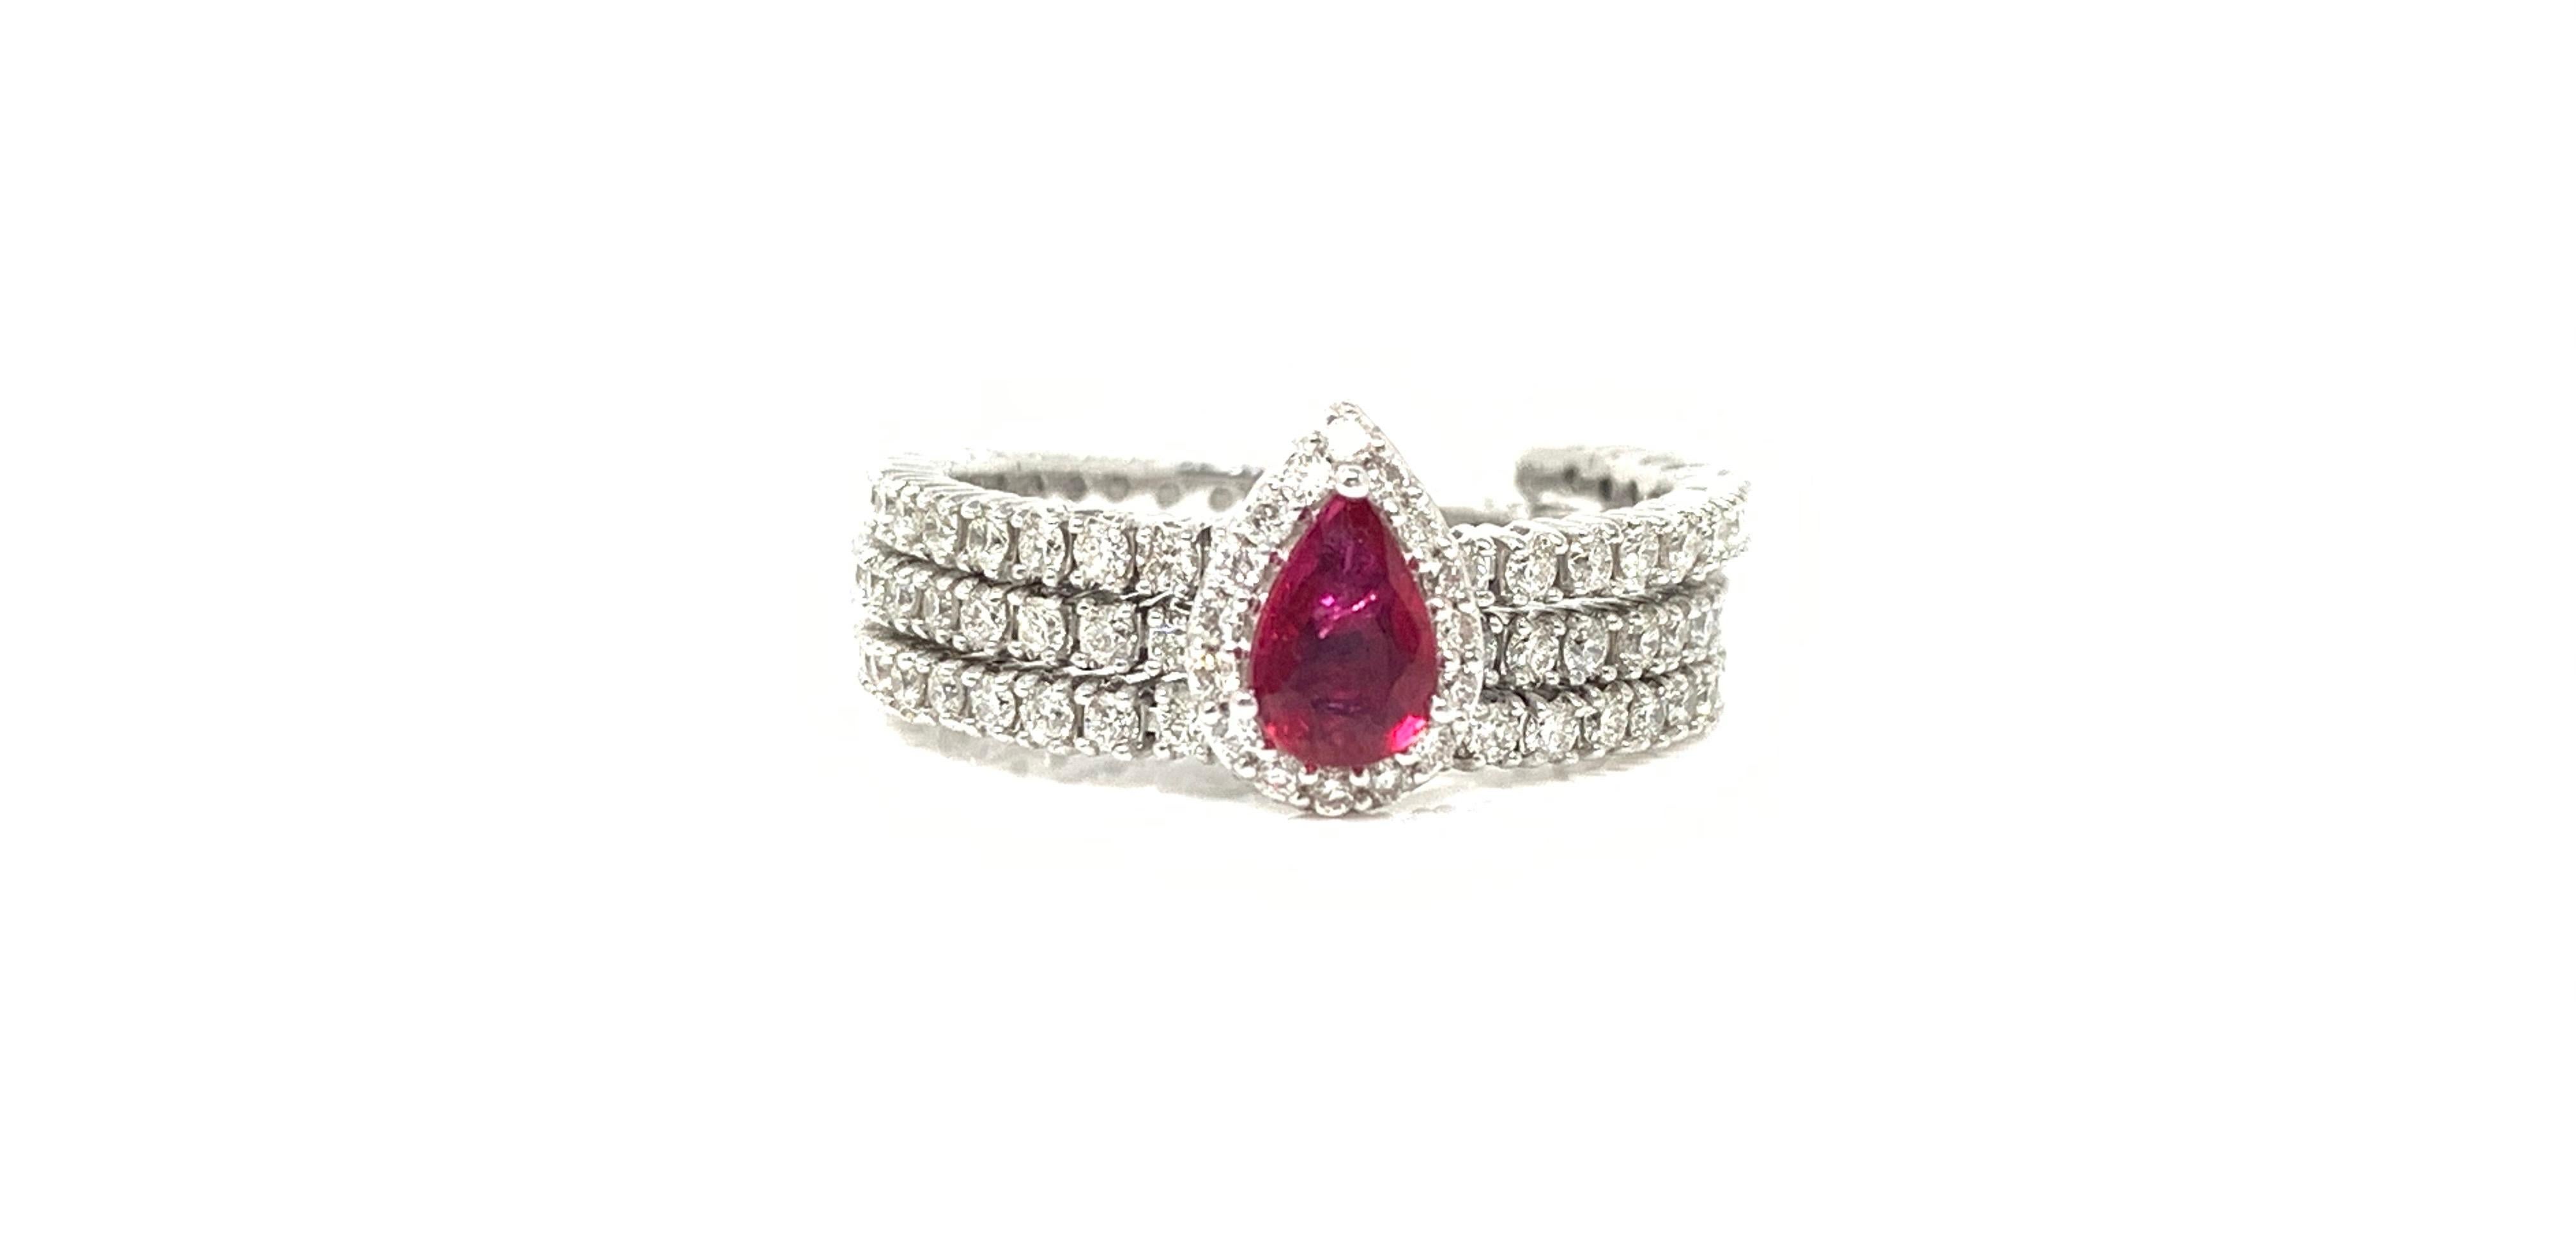 Moguldiam Inc diamond and ruby flexible ring handmade in 14 k white gold. 

ruby weight : 0.38 carat 
diamond weight : 1.05 carat 
metal : 14k white gold 